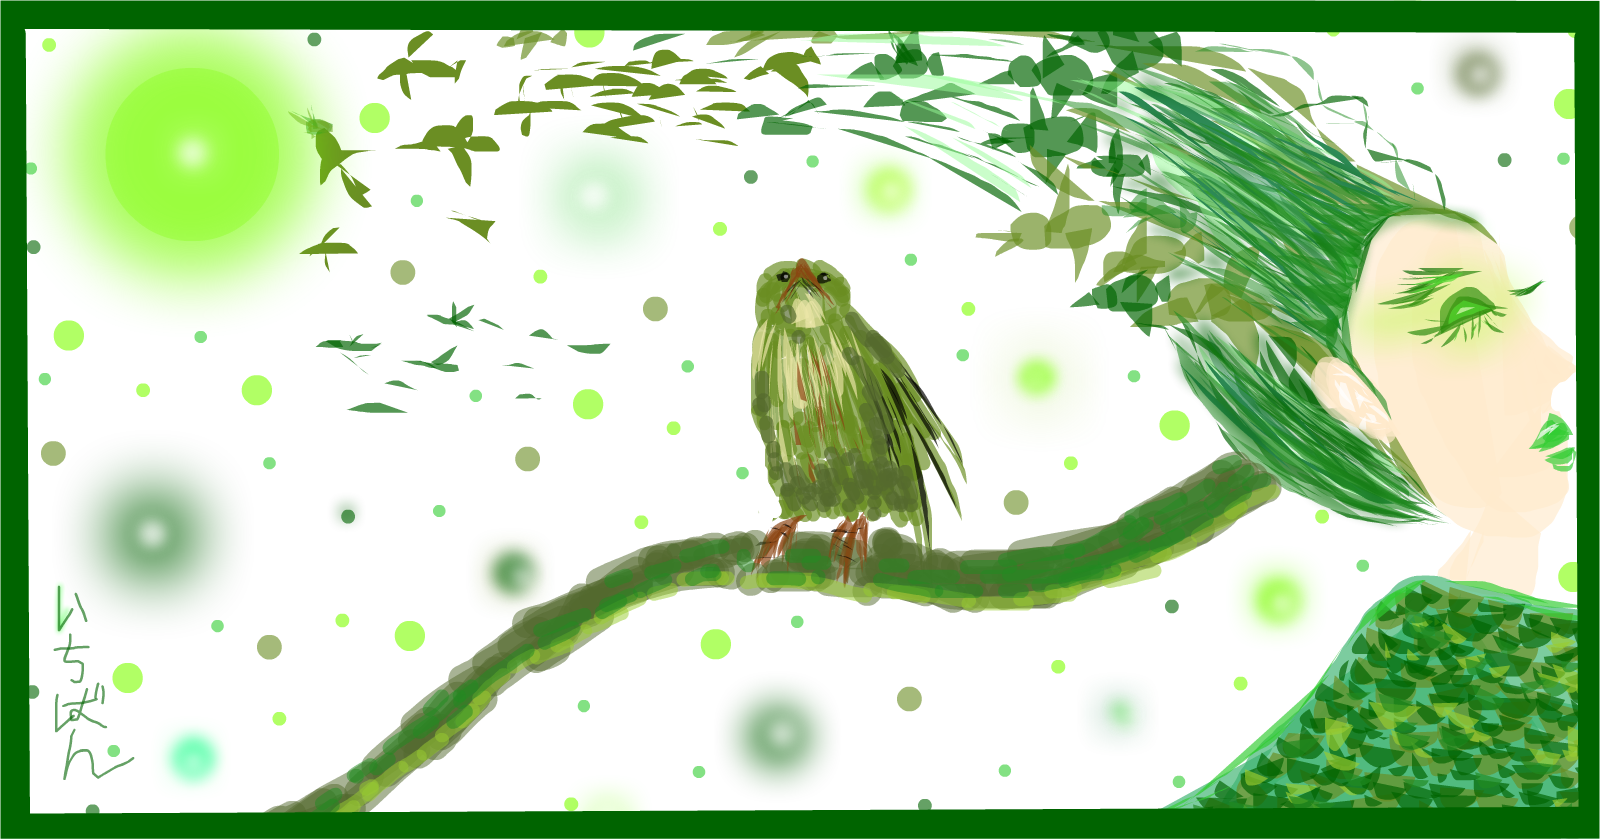 The Green Bird